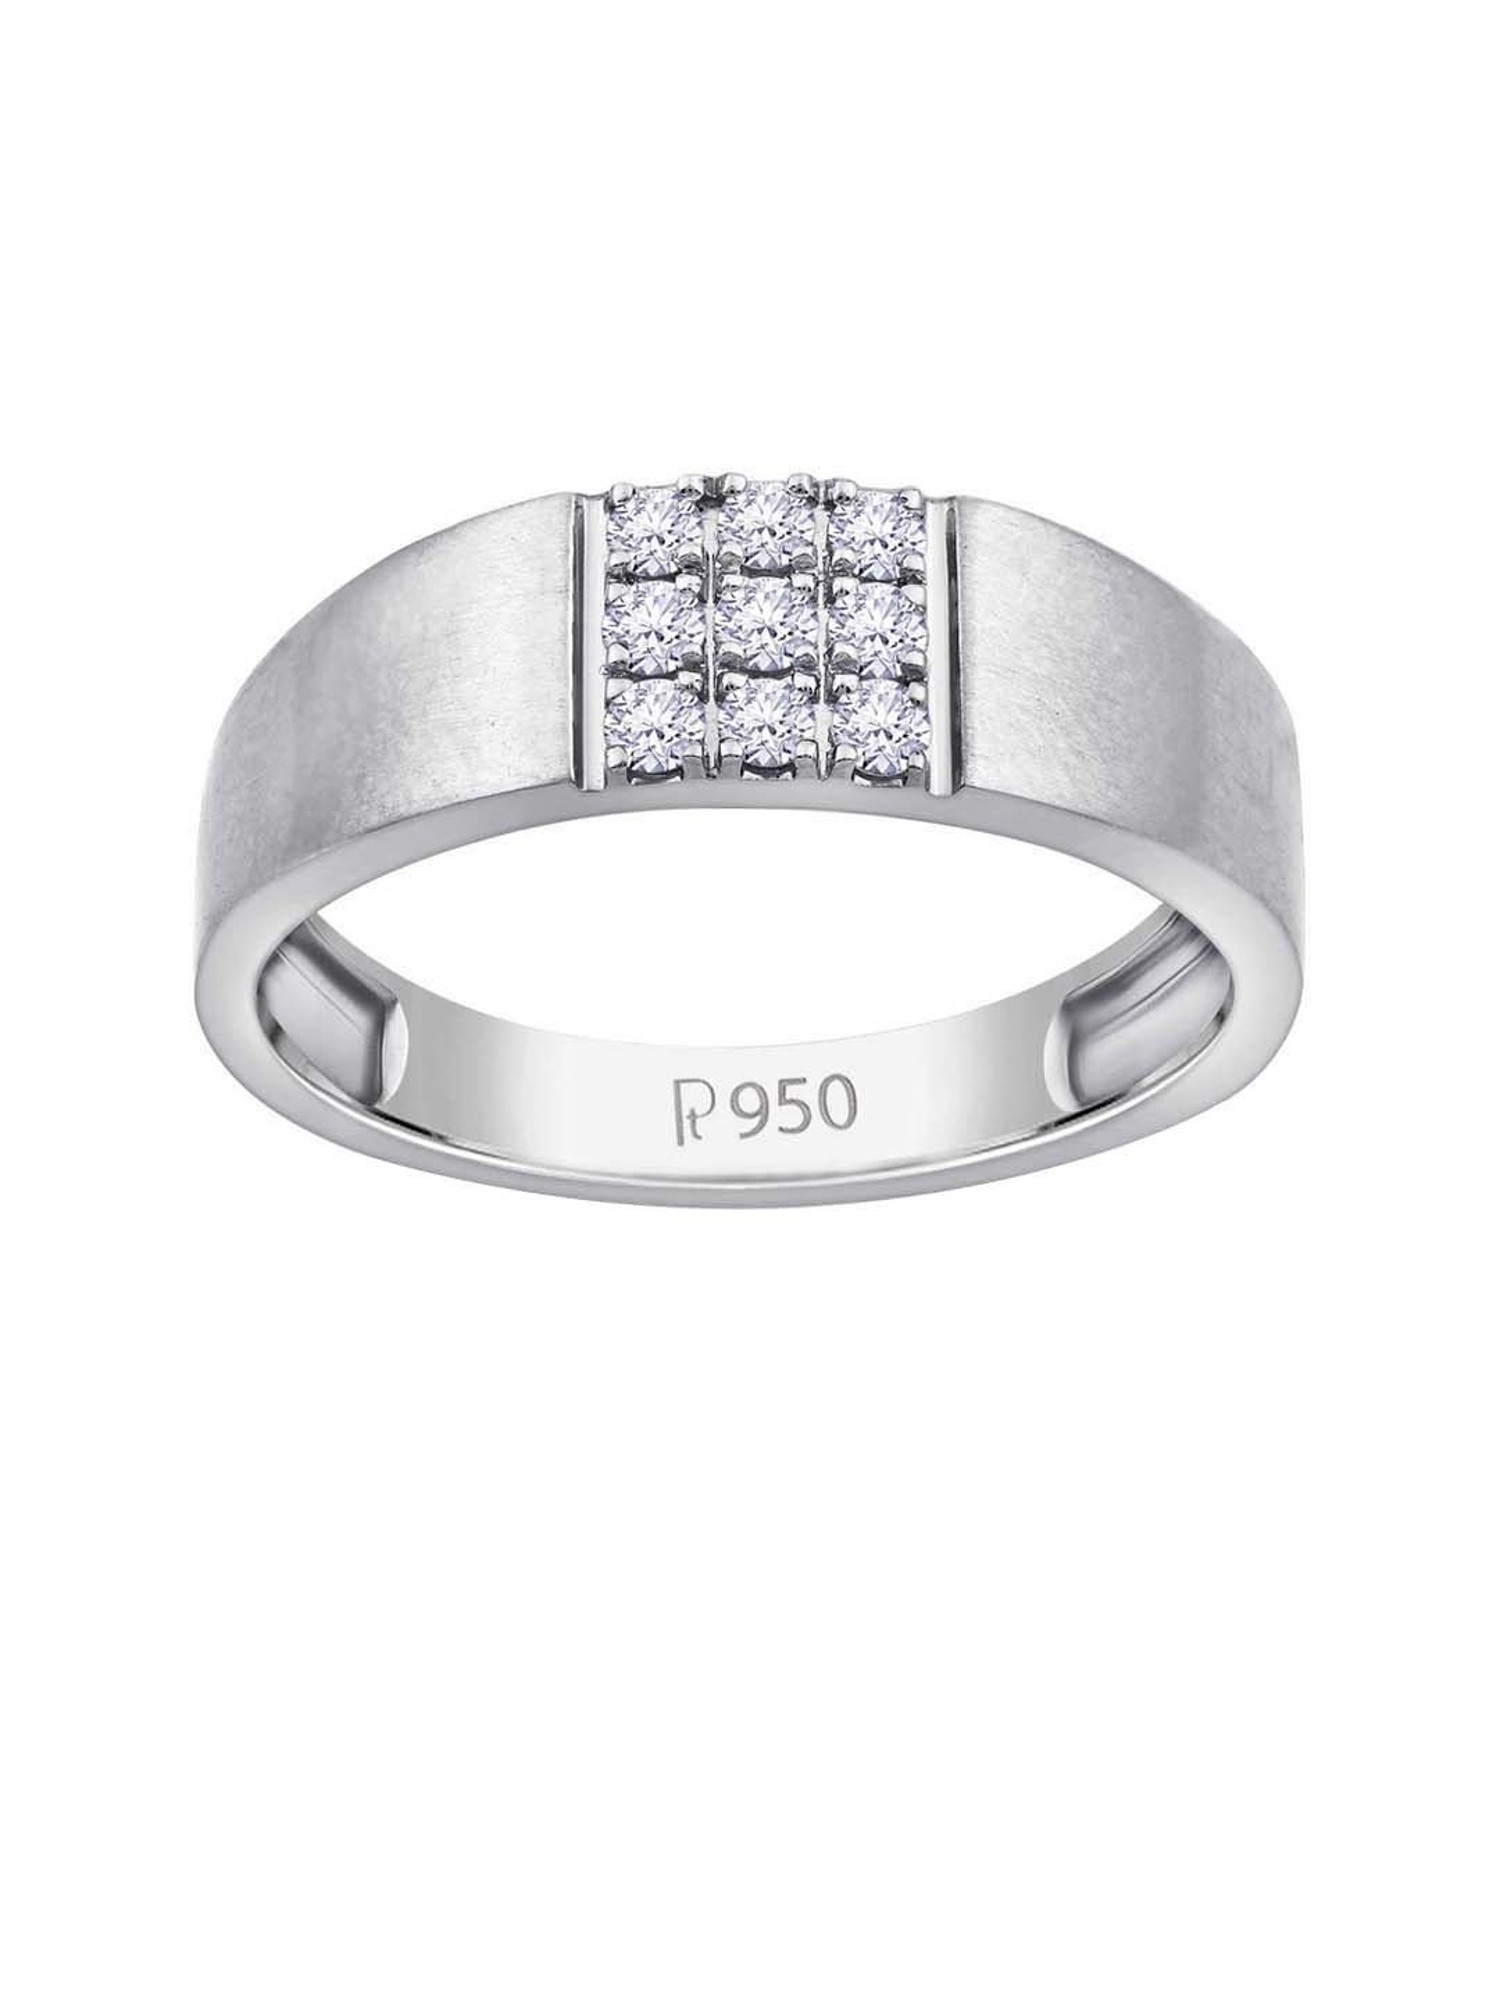 5 Stunning Diamond Rings To Celebrate Your Enduring Bond